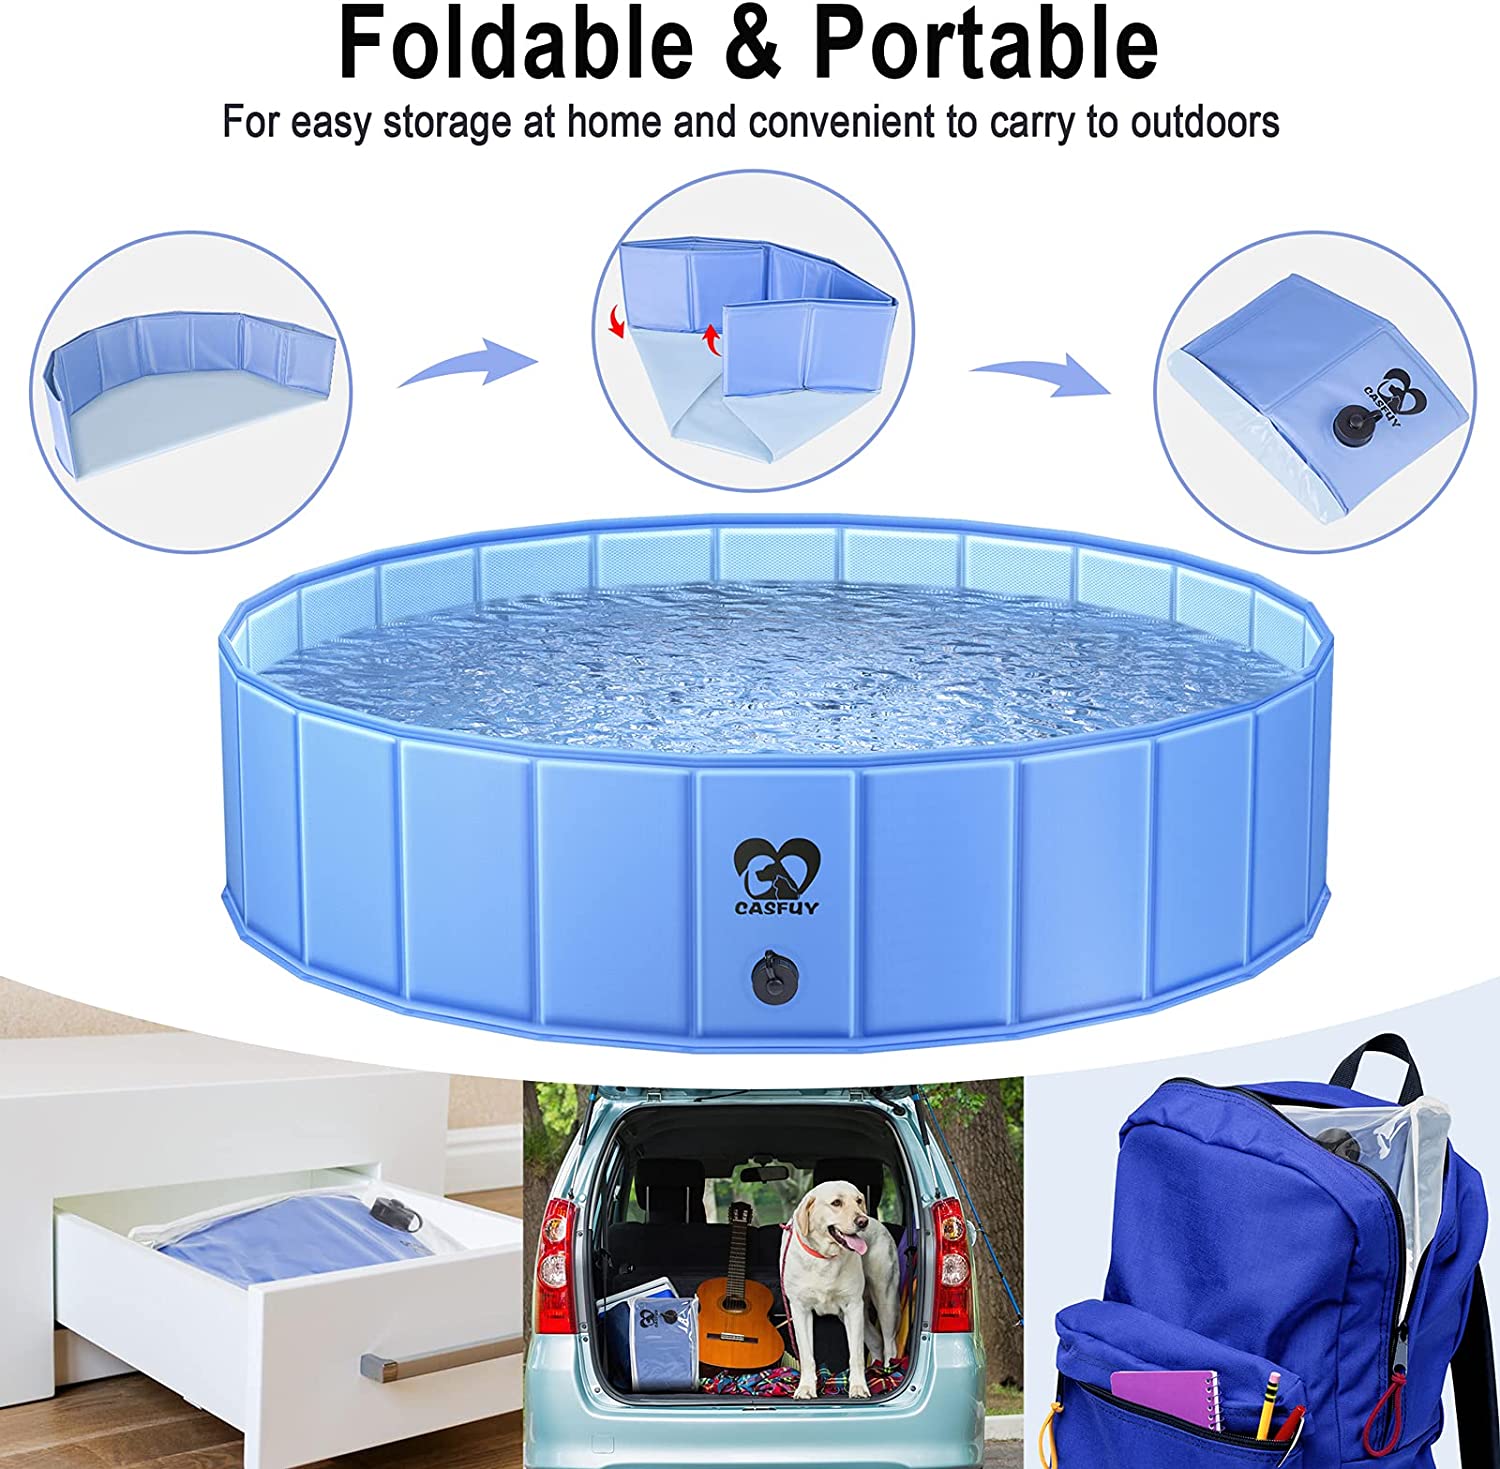 Casfuy Foldable Dog Pool